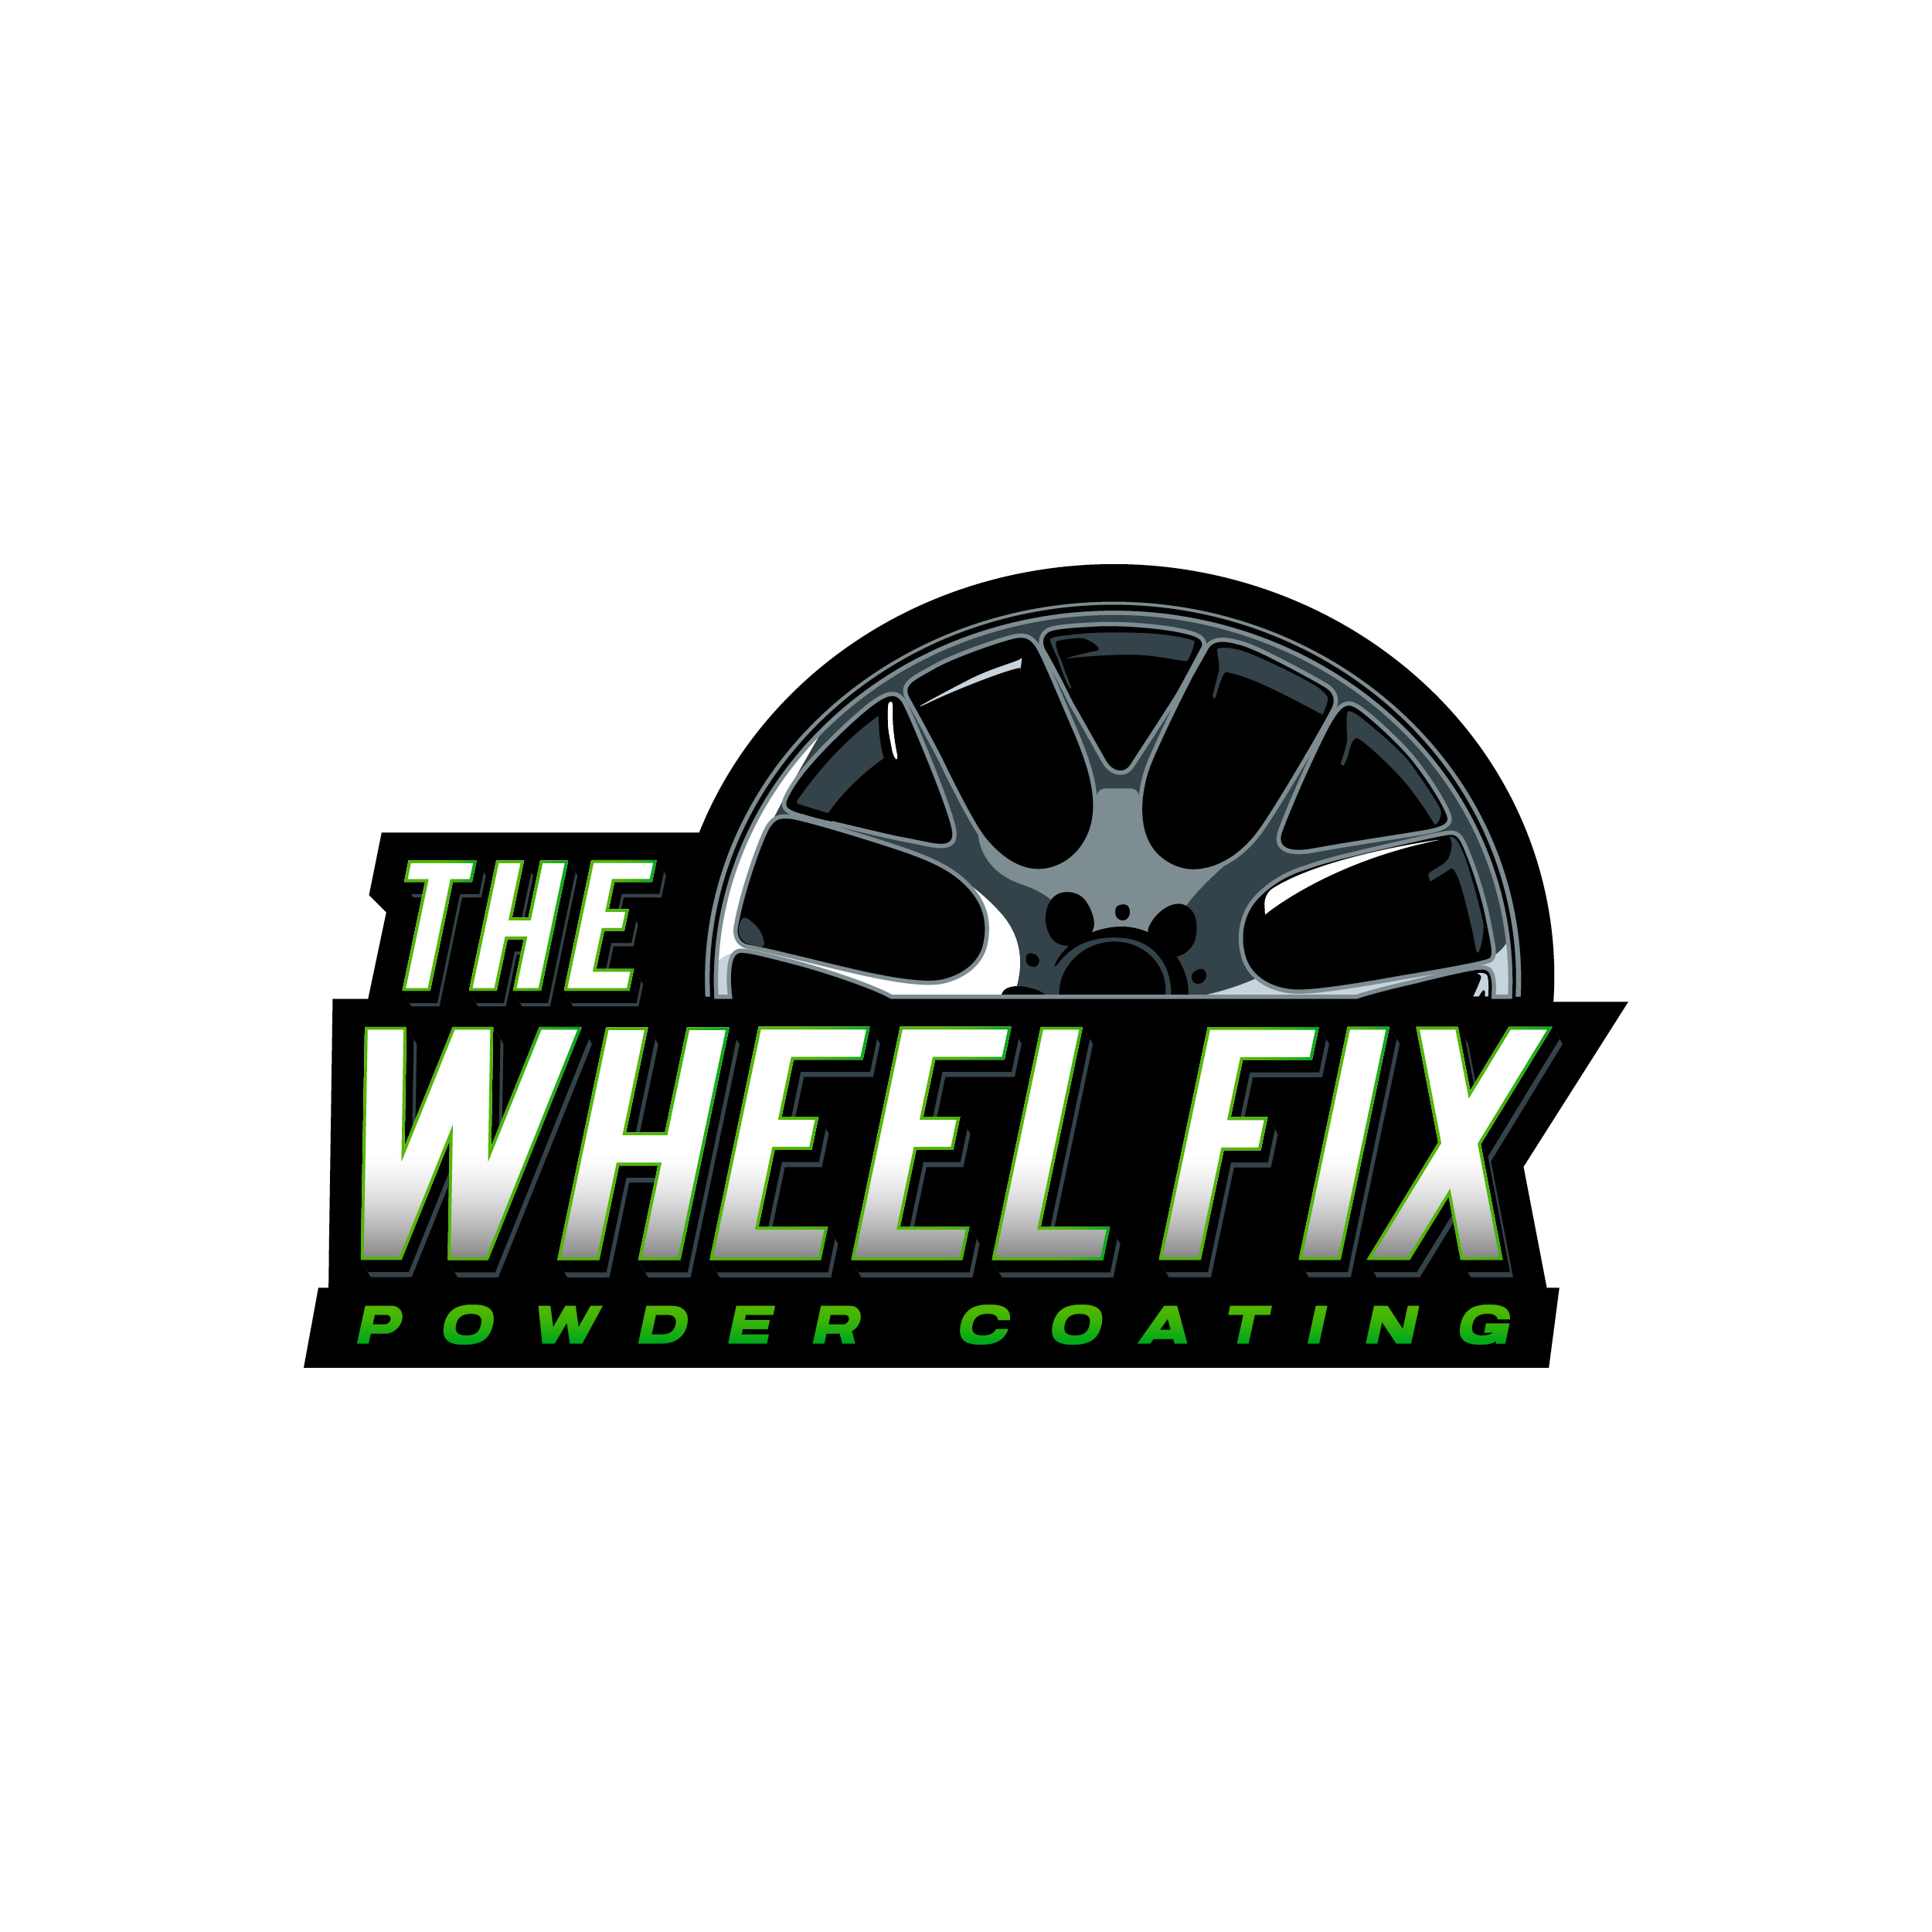 The Wheel Fix